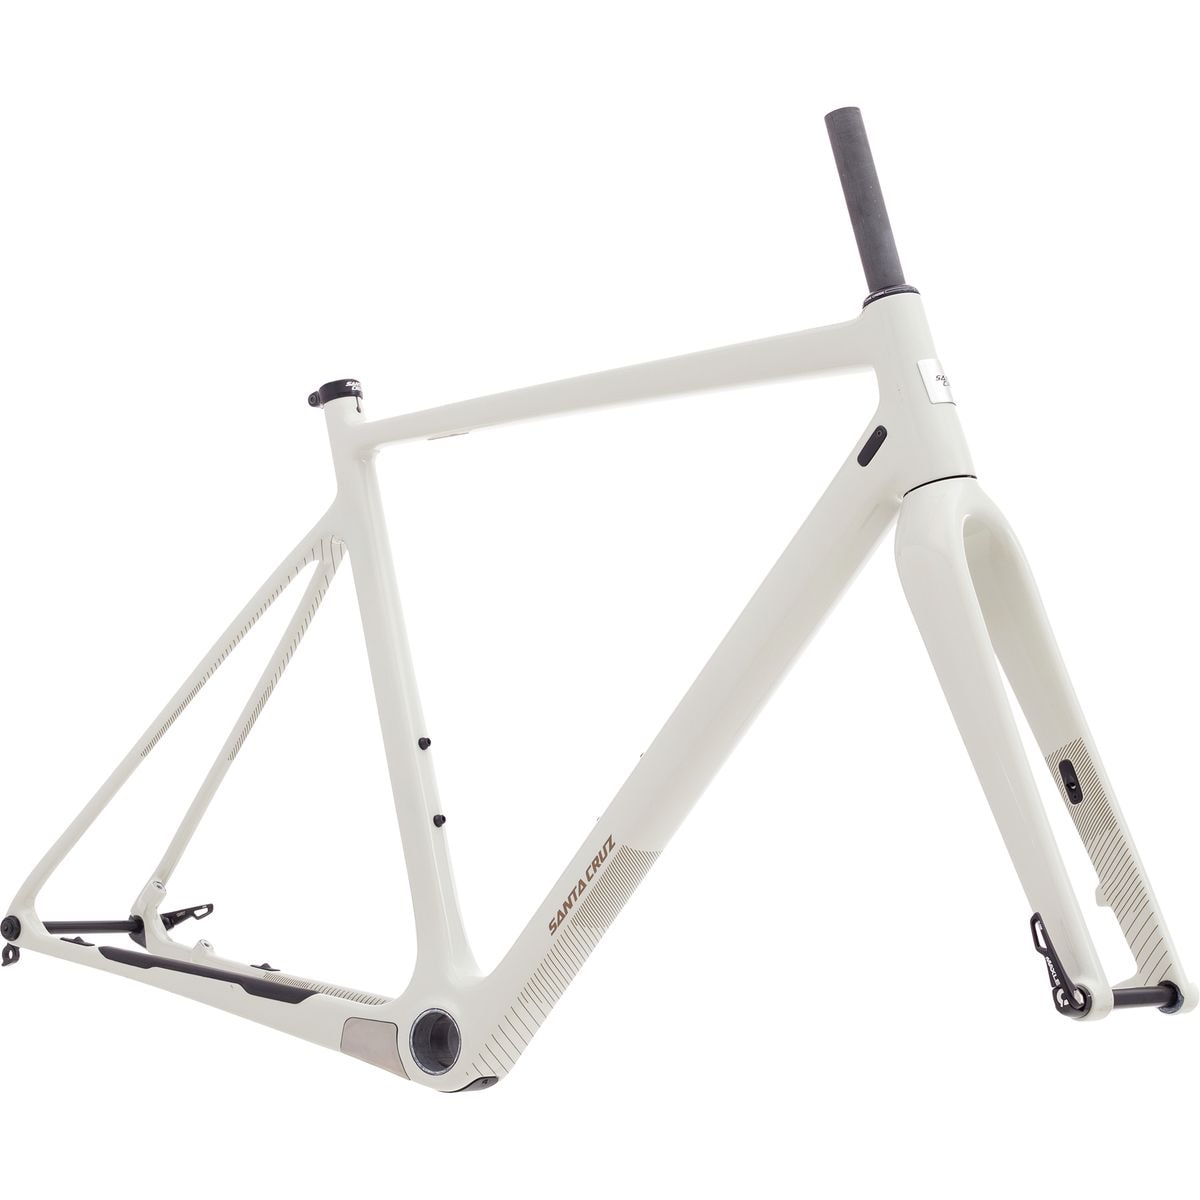 Santa Cruz Bicycles Stigmata Carbon CC Cyclocross Frameset